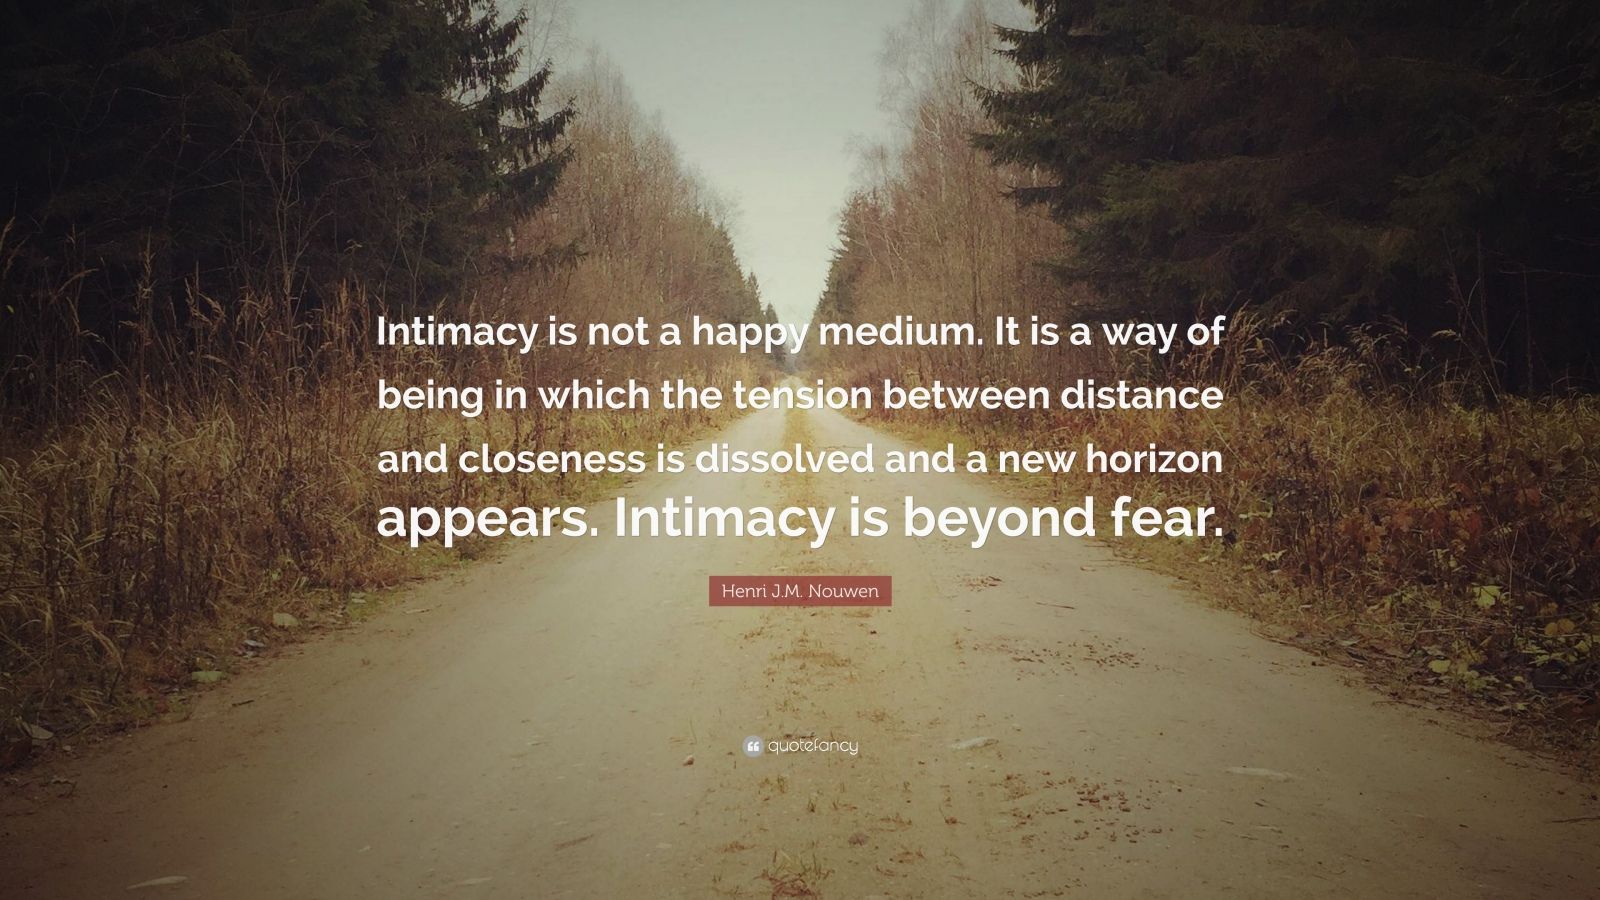 Henri J.M. Nouwen Quote: “Intimacy is not a happy medium ...